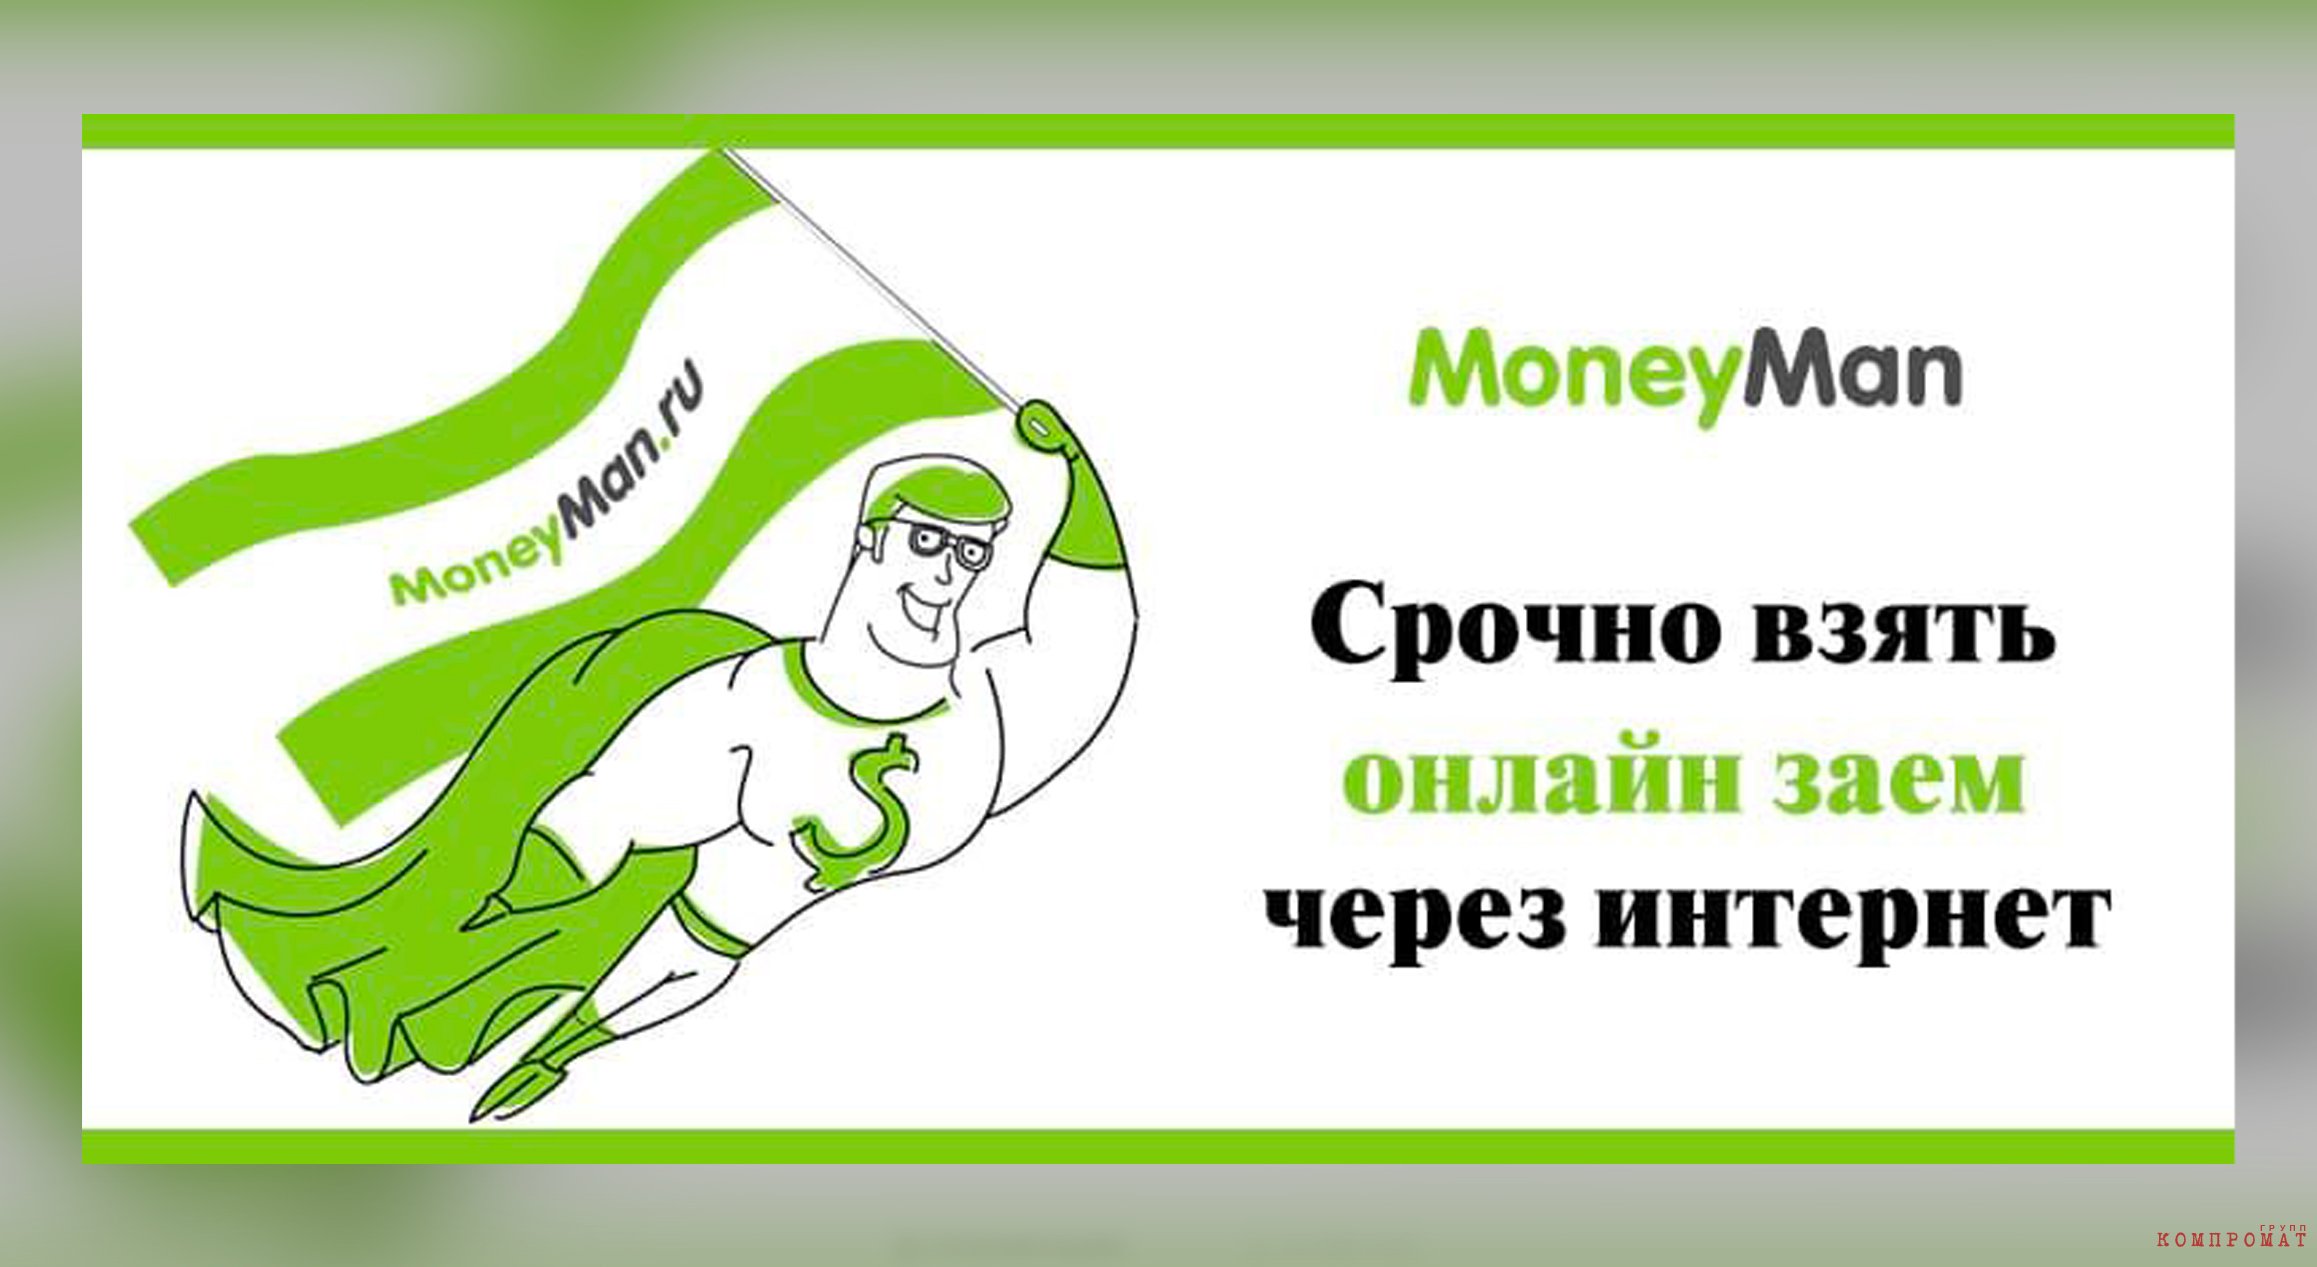 Символ MoneyMan — супермен в зелёном, как доллар, костюме